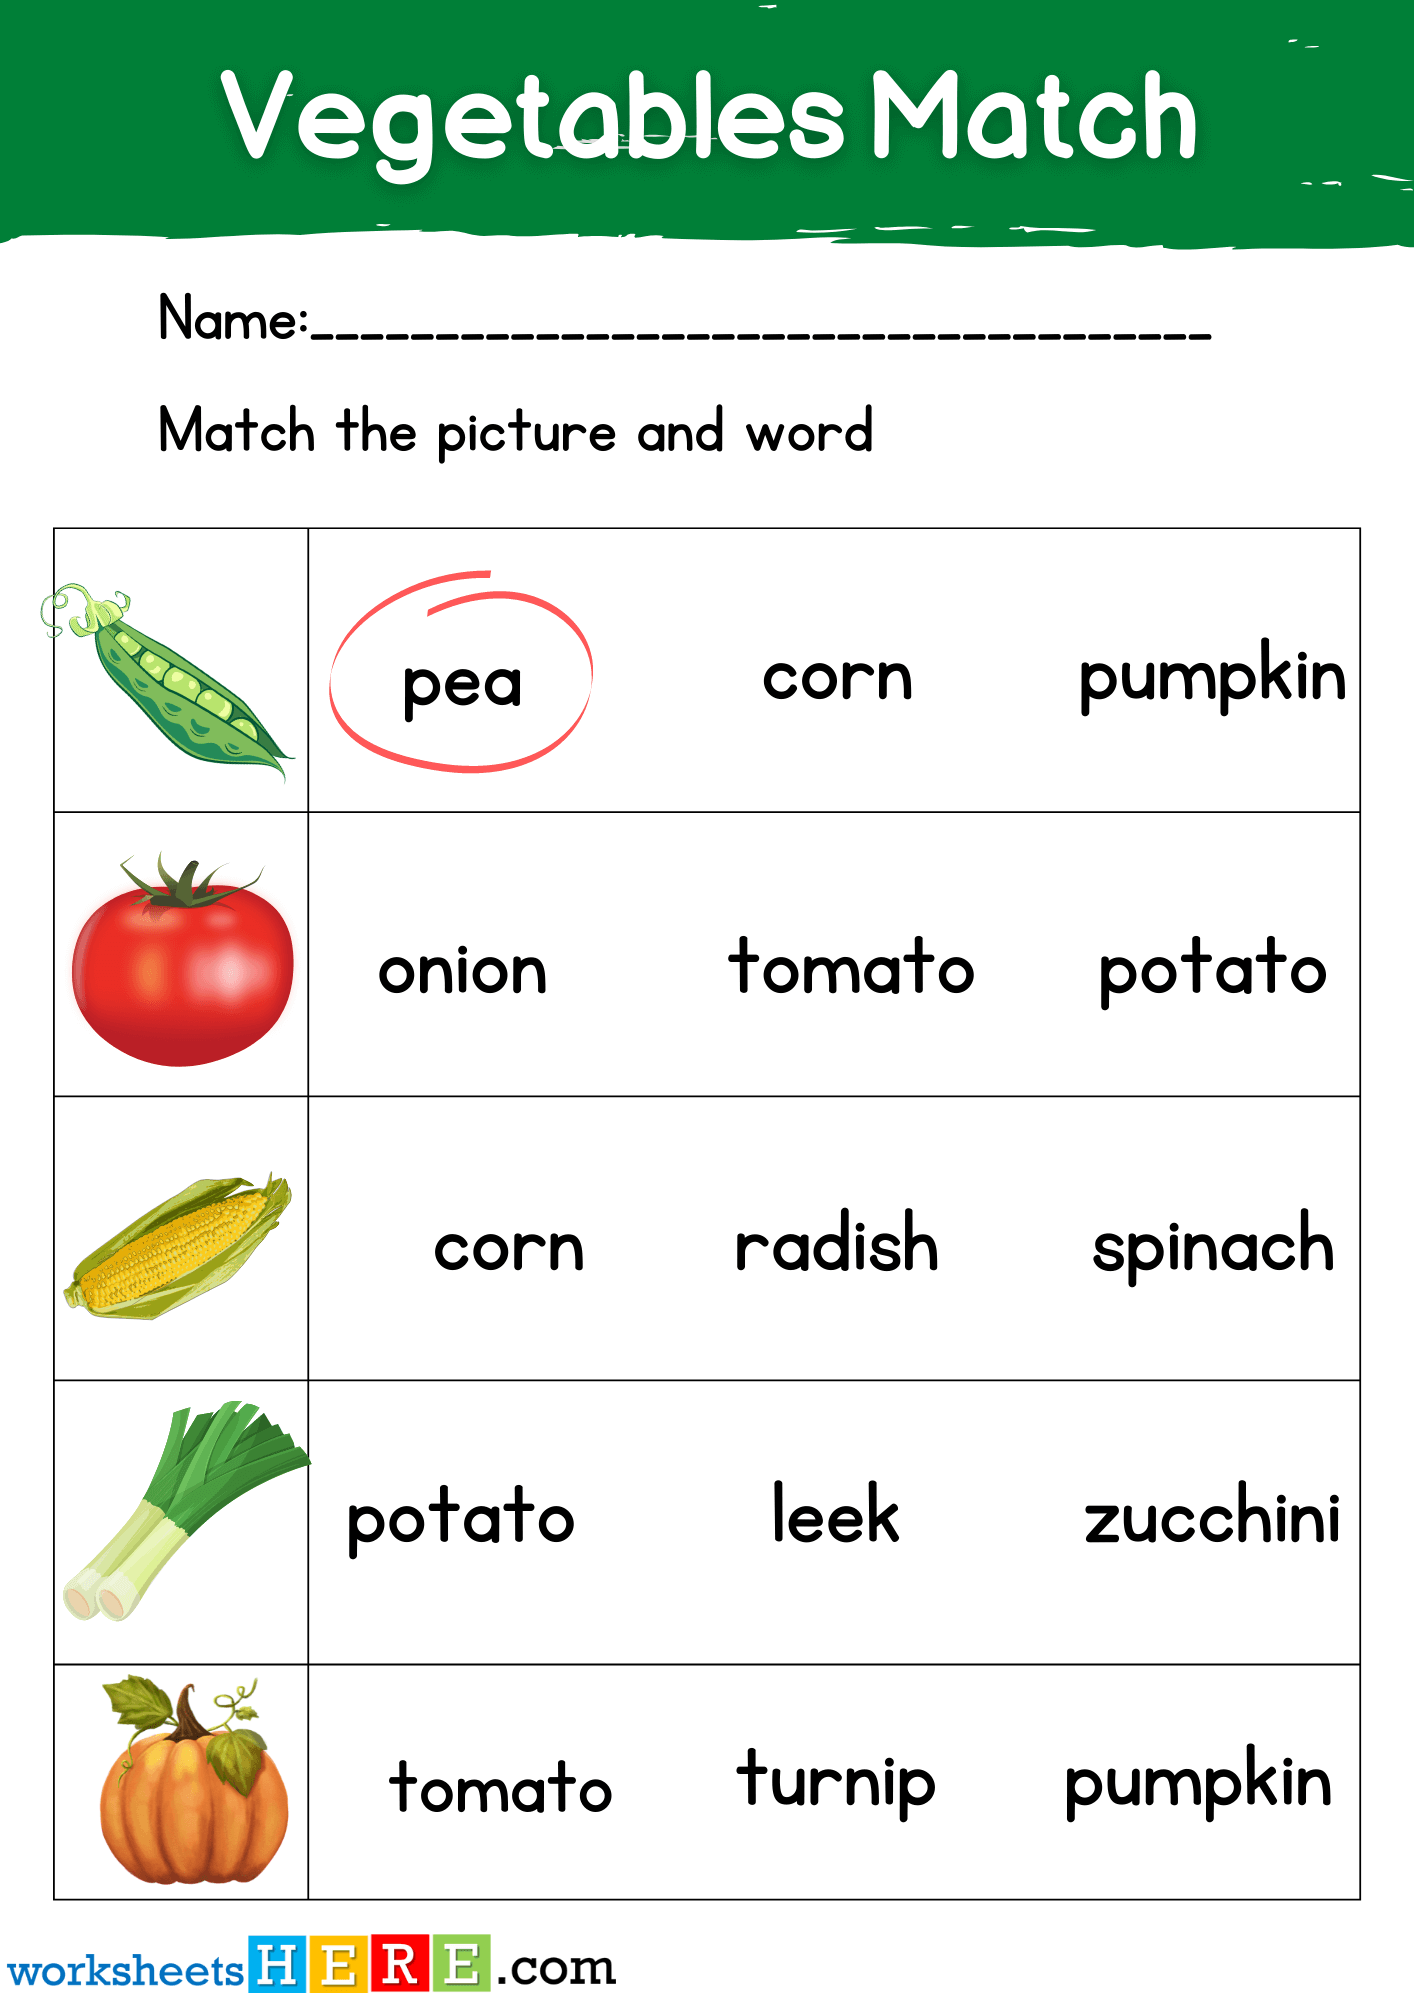 Vegetables Names Match with Pictures Activity PDF Worksheet For Kindergarten